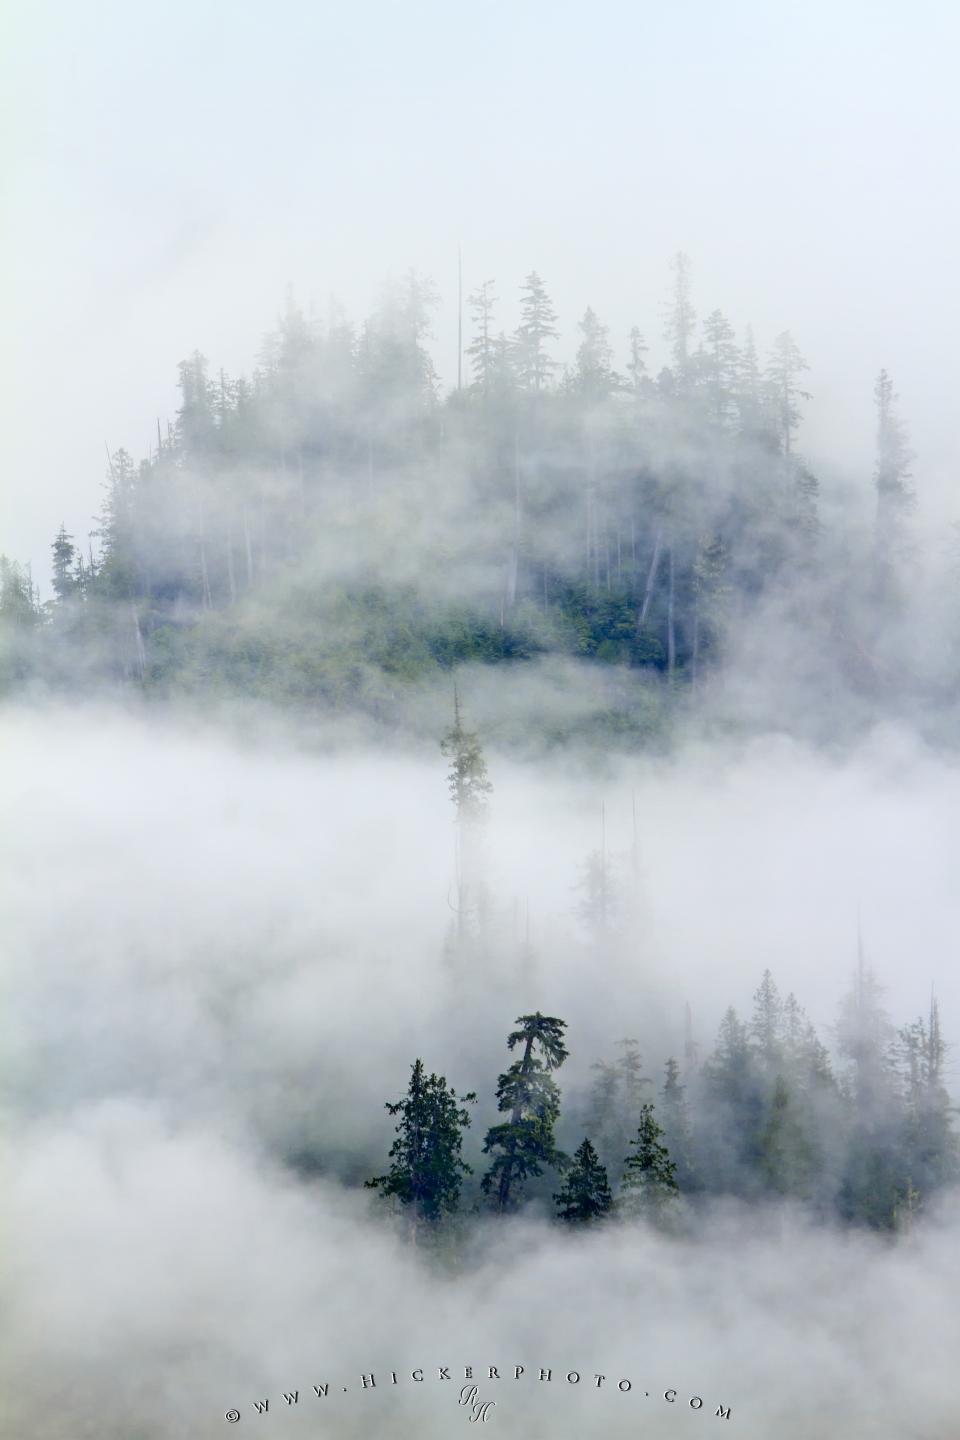 Free wallpaper background: Fog Mist Great Bear Rainforest British